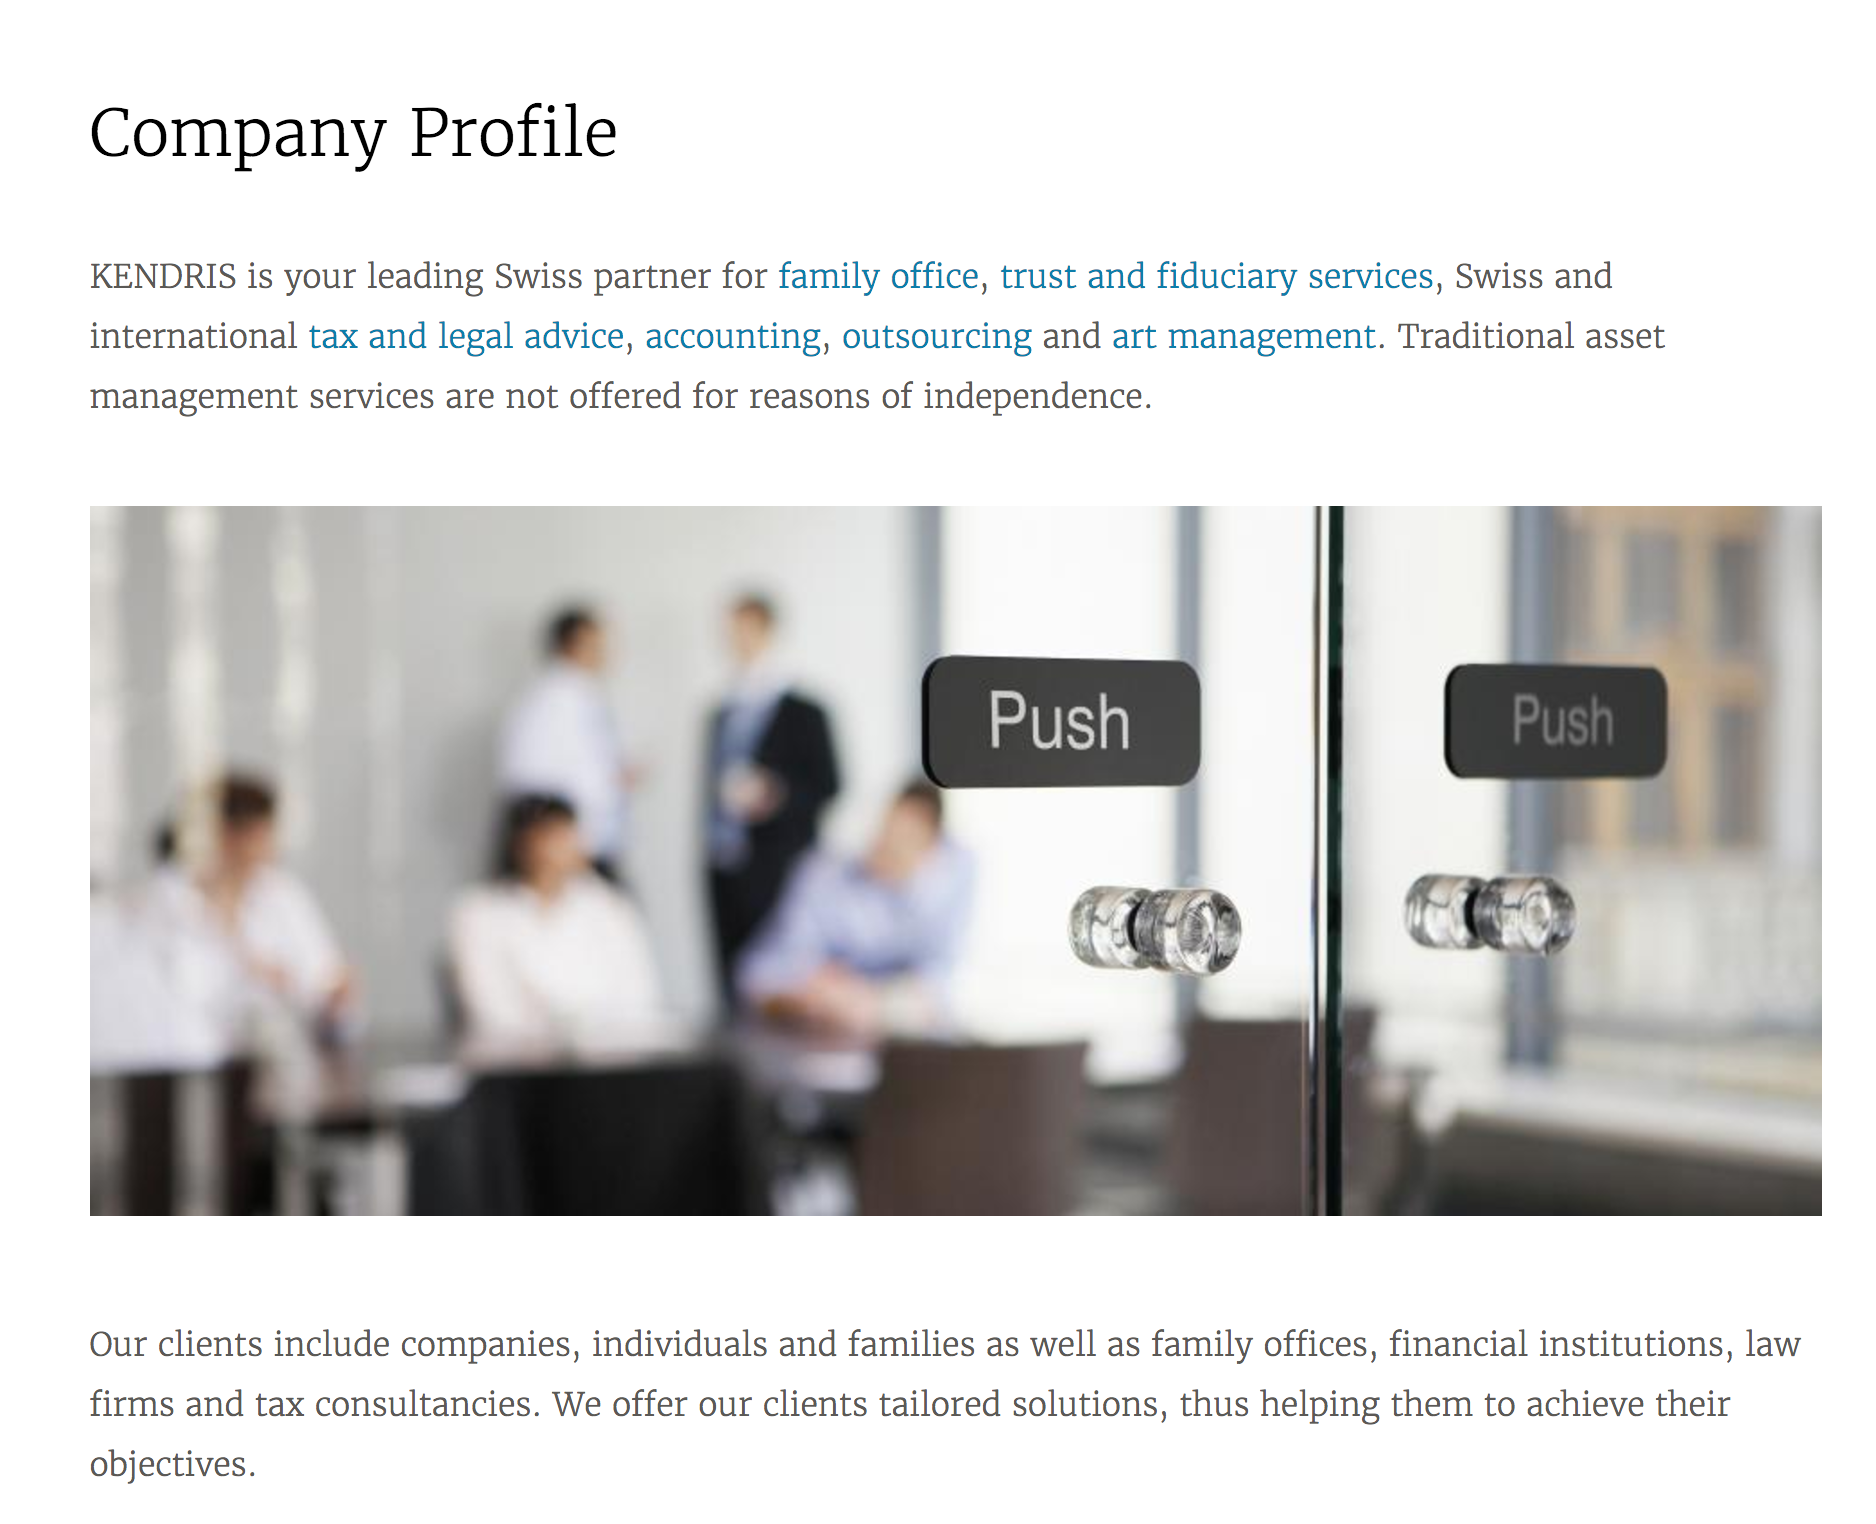 KENDRIS Company Profile